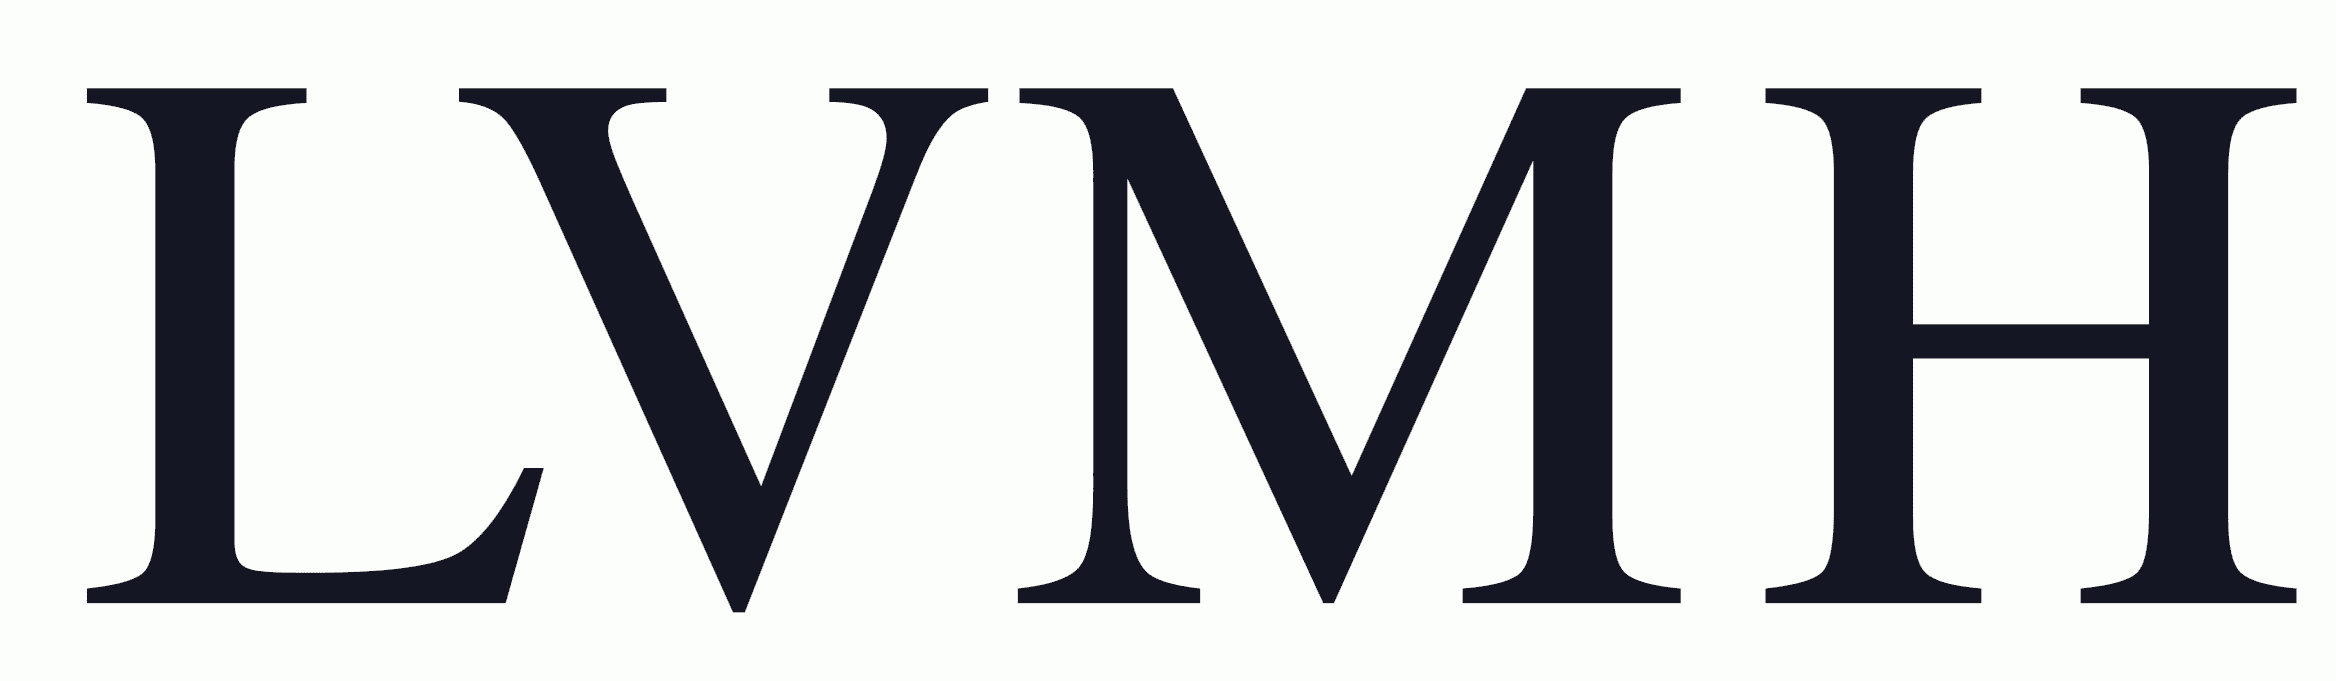 LVMH-logo